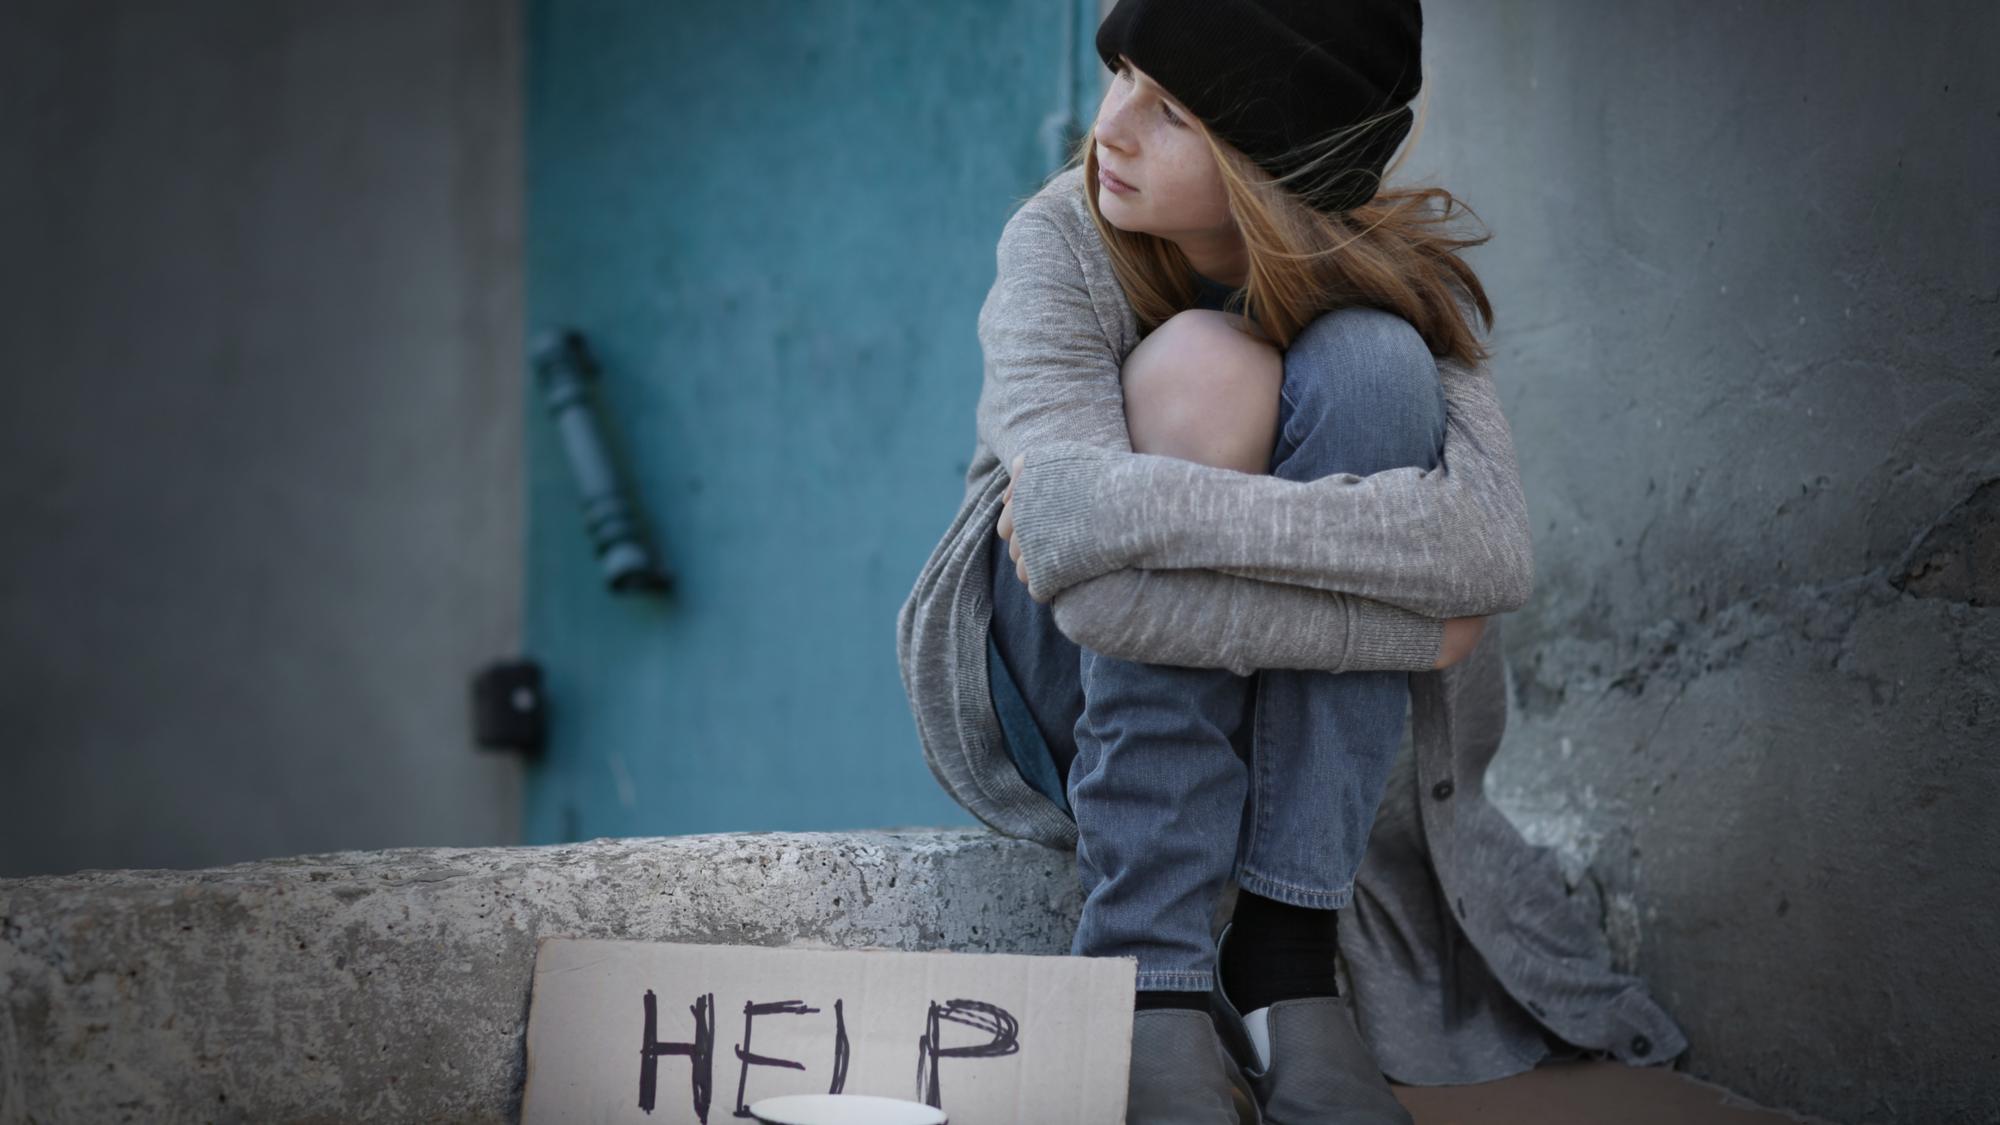 Obdachloses Mädchen